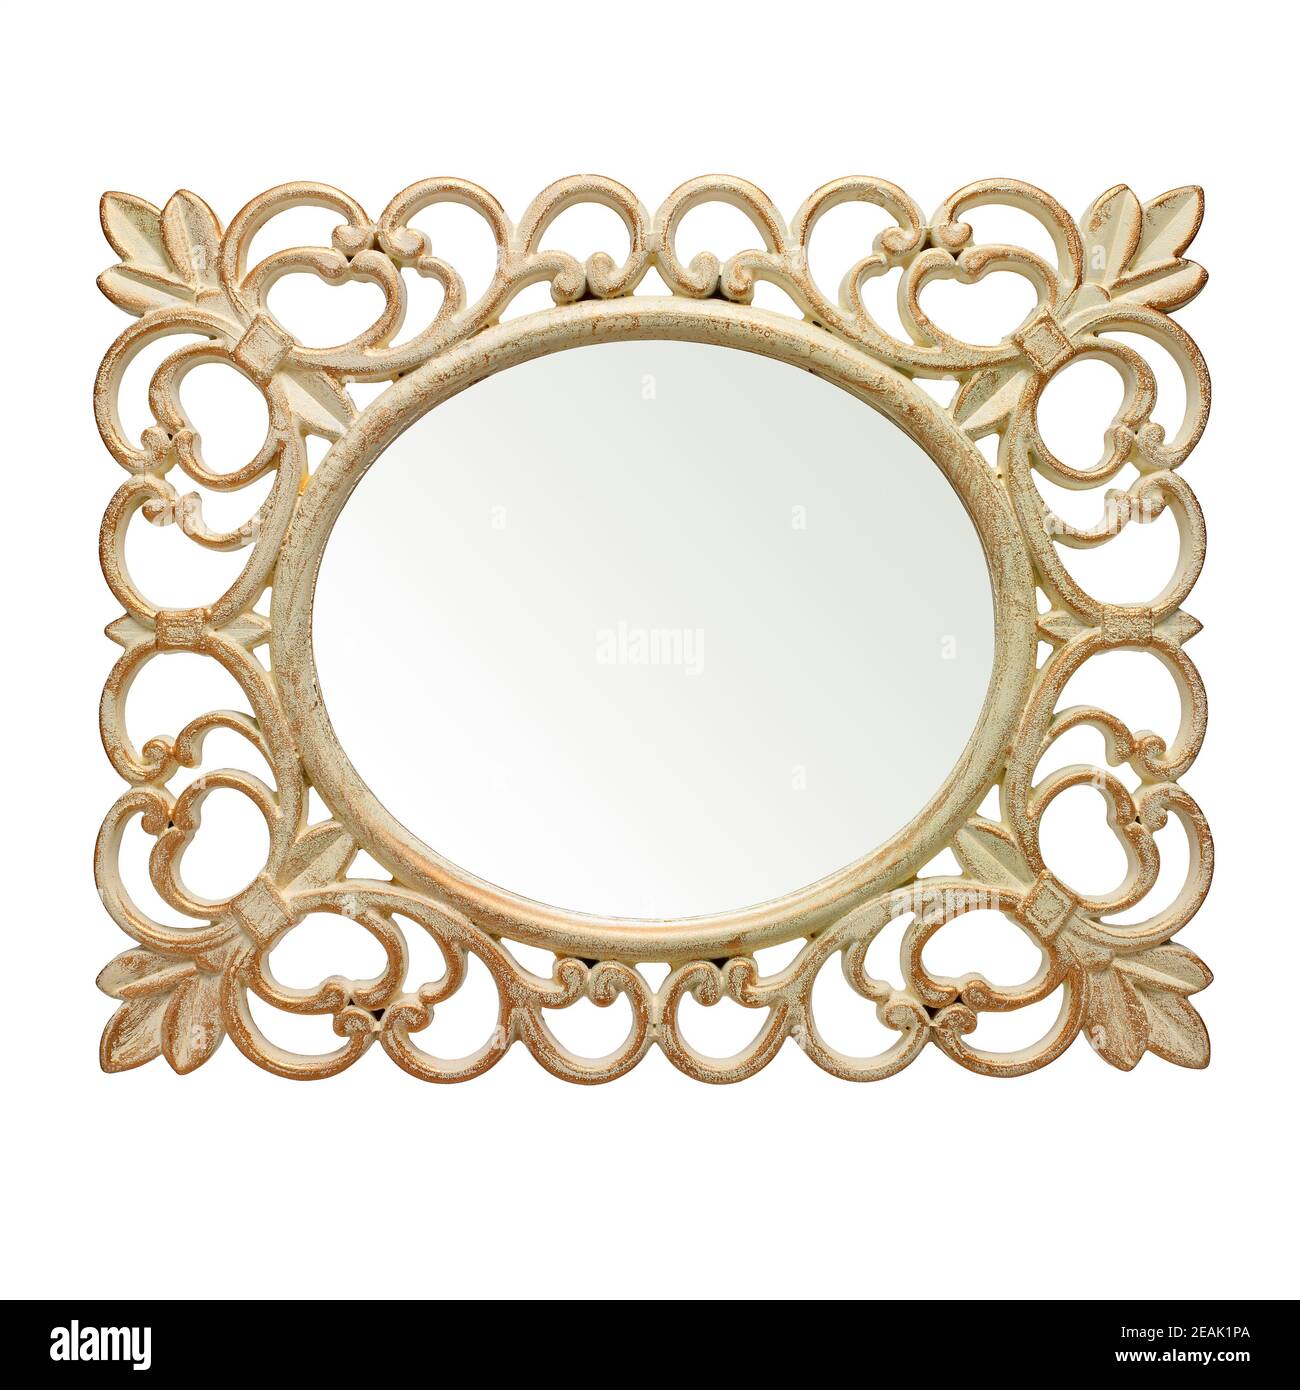 Rustic mirror frame Stock Photo